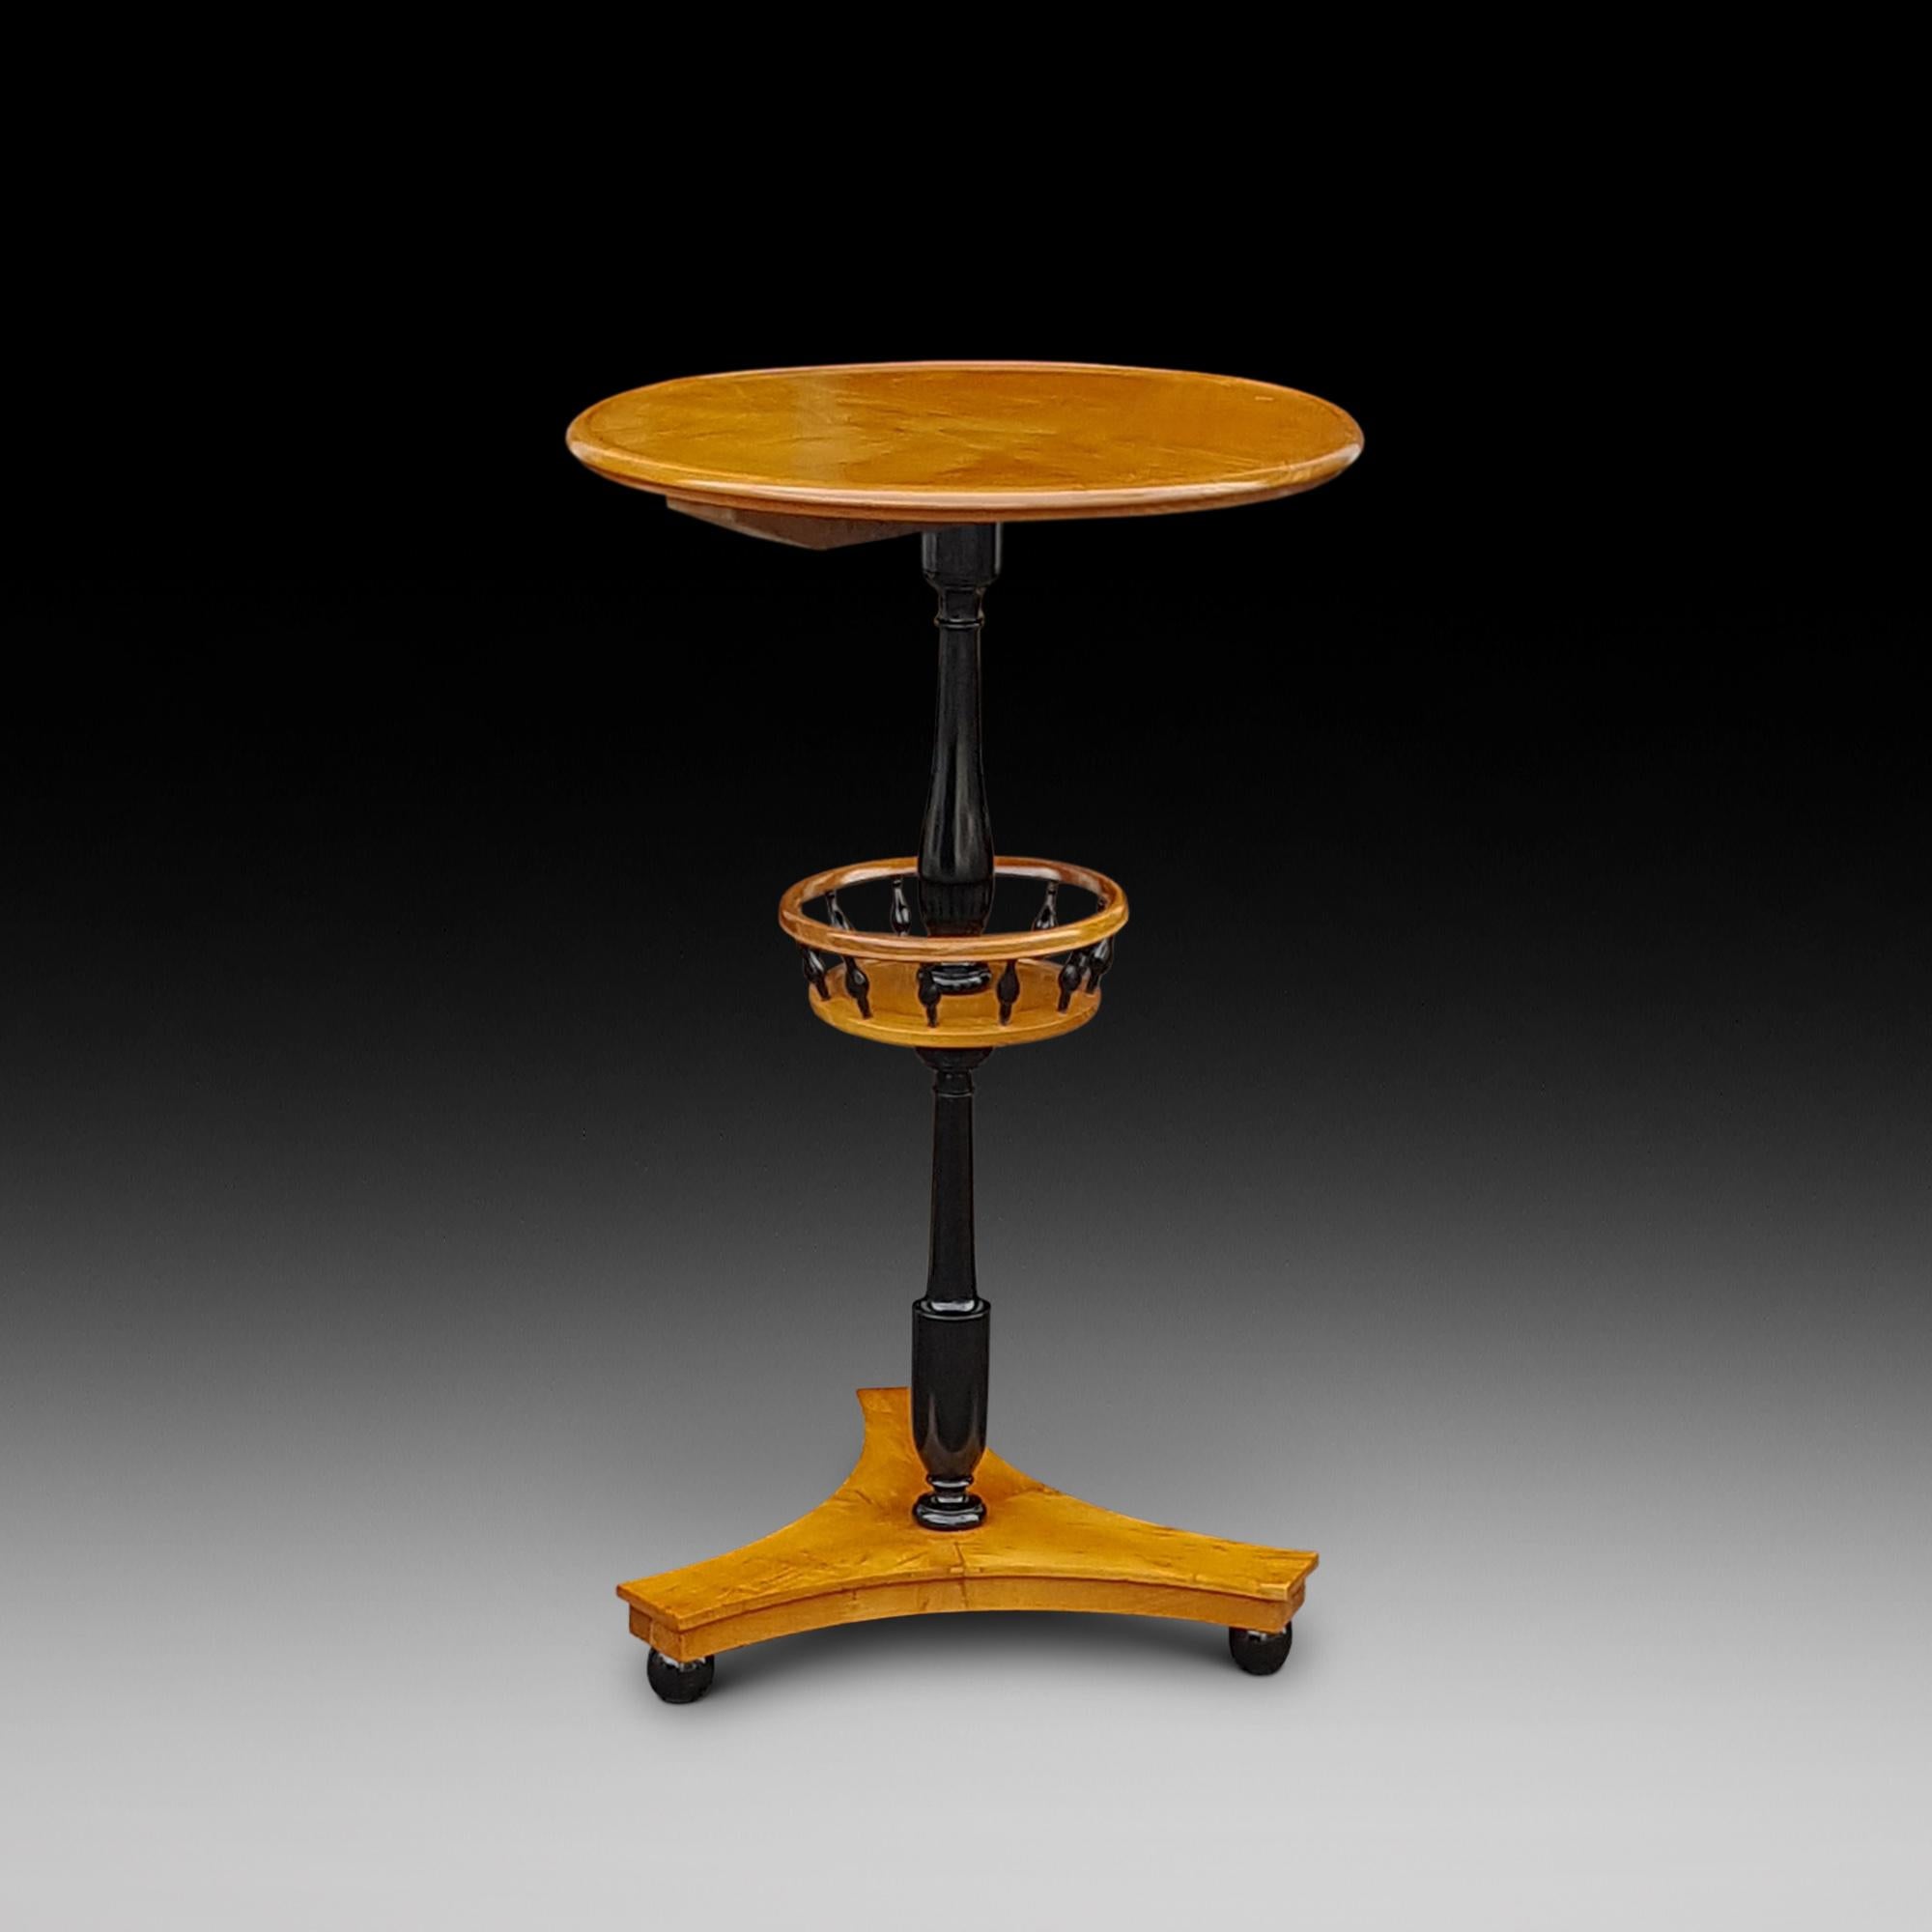 Biedermeier late 19th century maple side lamp table with tri-form base raised on short bun feet, measure: 18